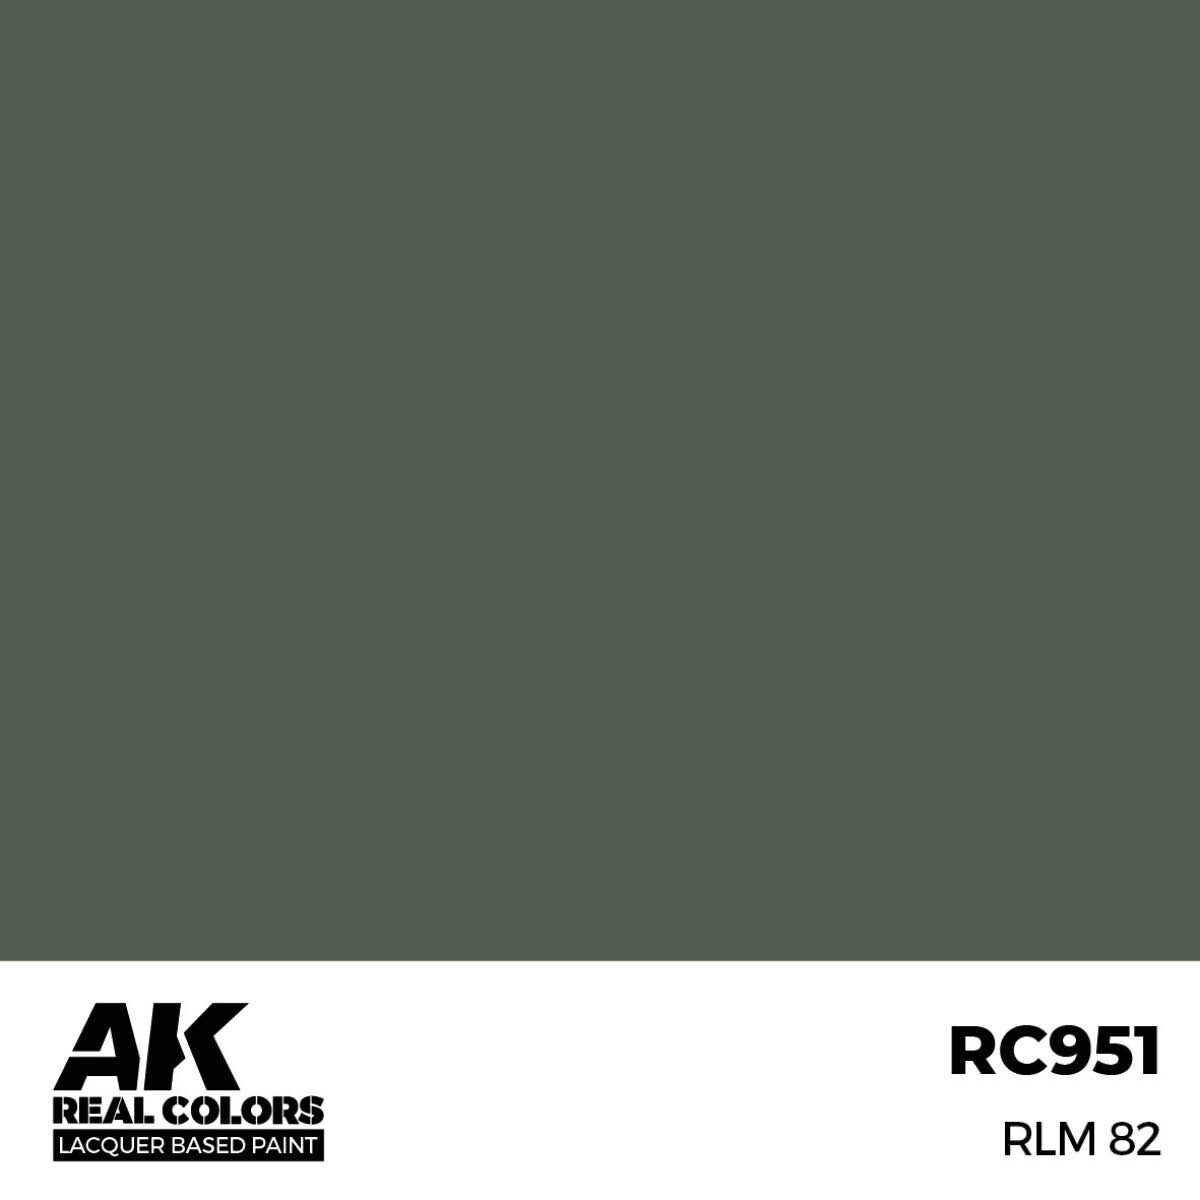 AK RC951 Real Colors RLM 82 17 ml.